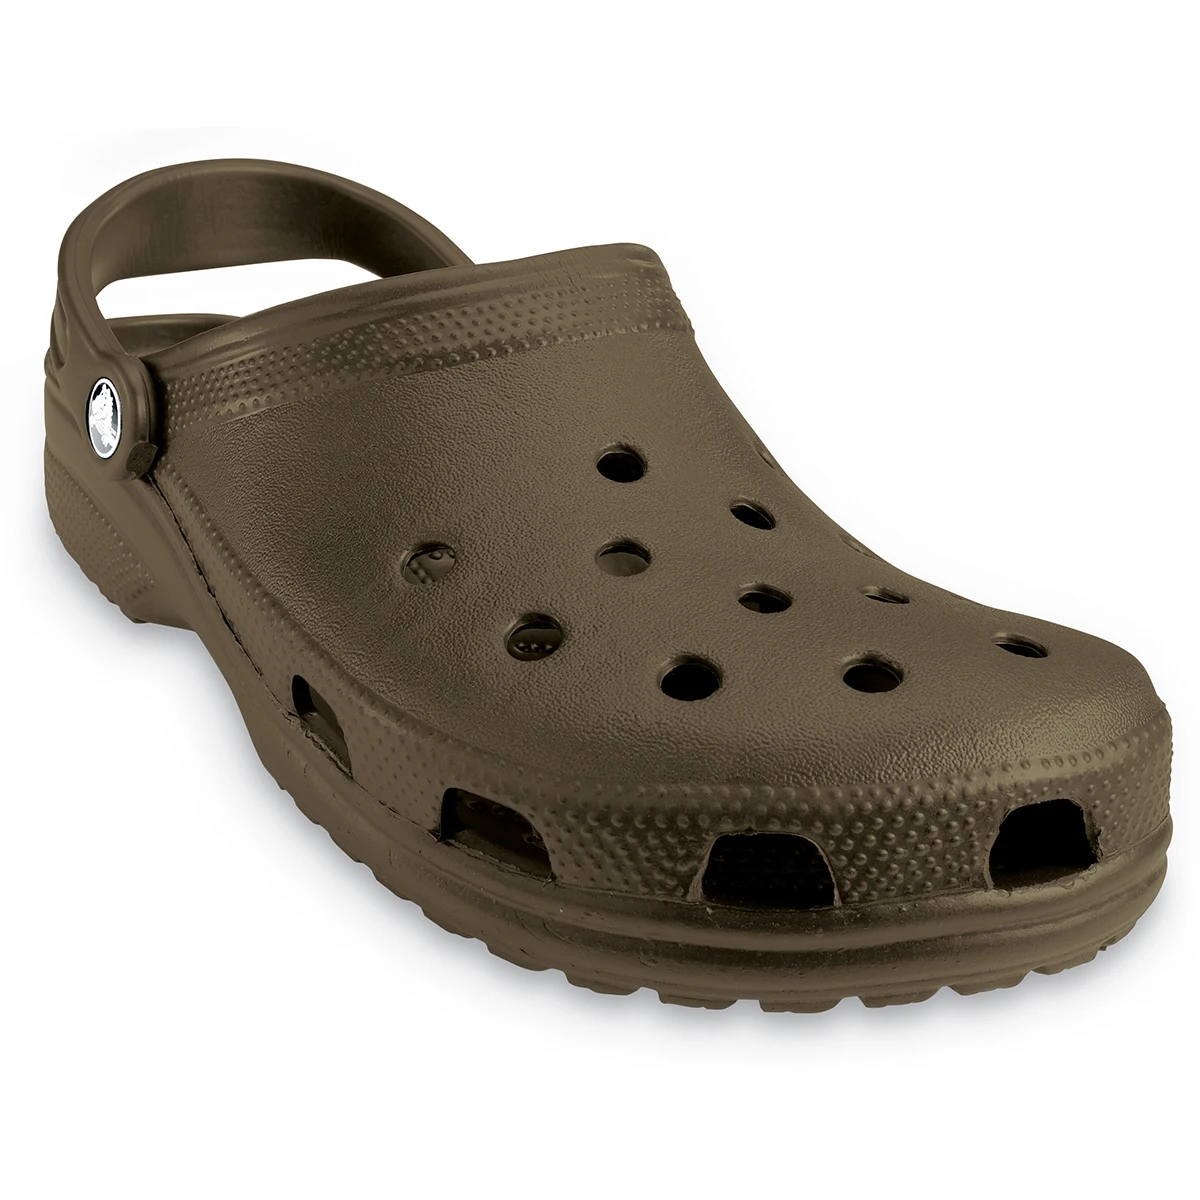 Мужские сабо с закрытым носом. Crocs Classic Clog. Crocs 208121. Сандали крокс с вентиляцией. Кроксы градиент.